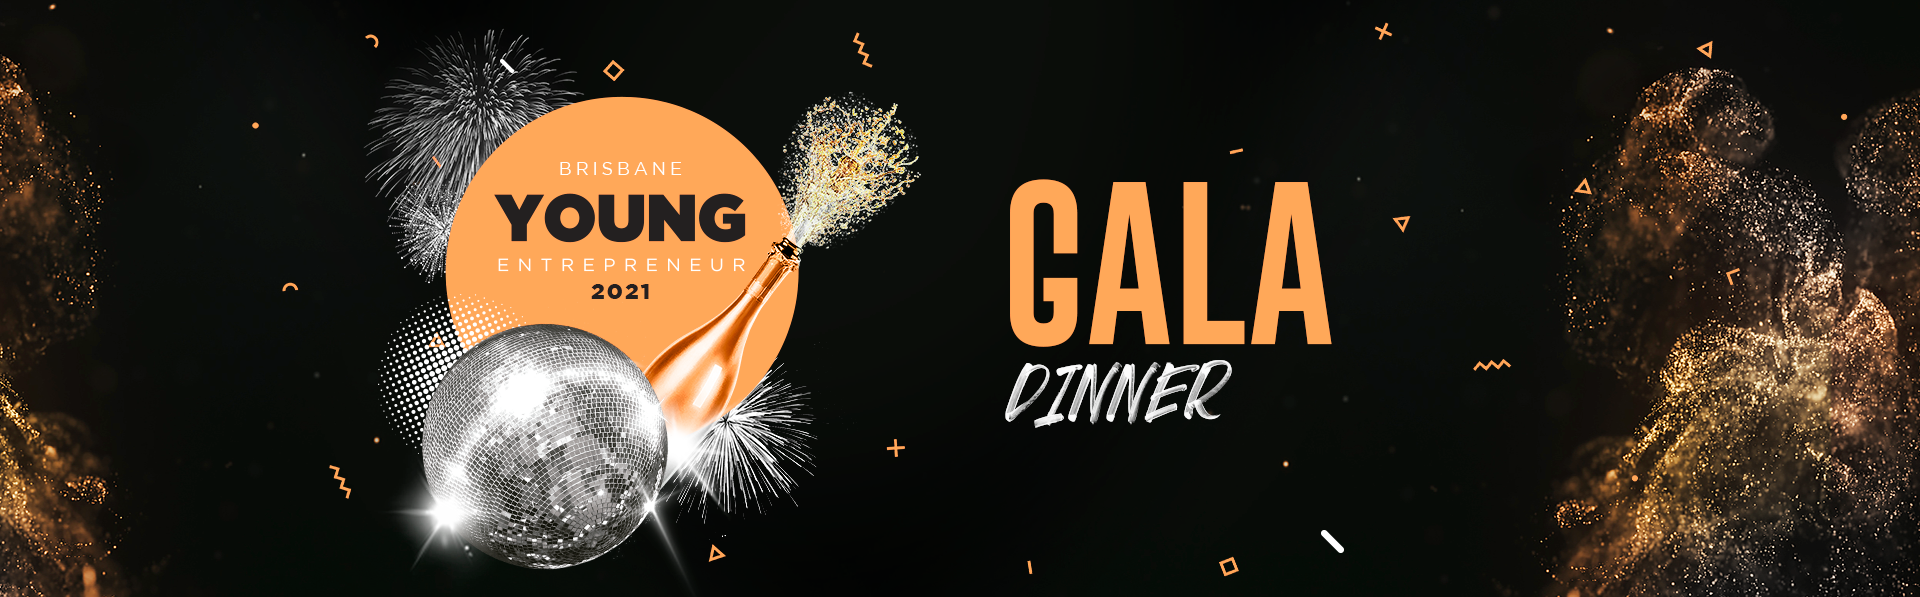 2021 Gala dinner